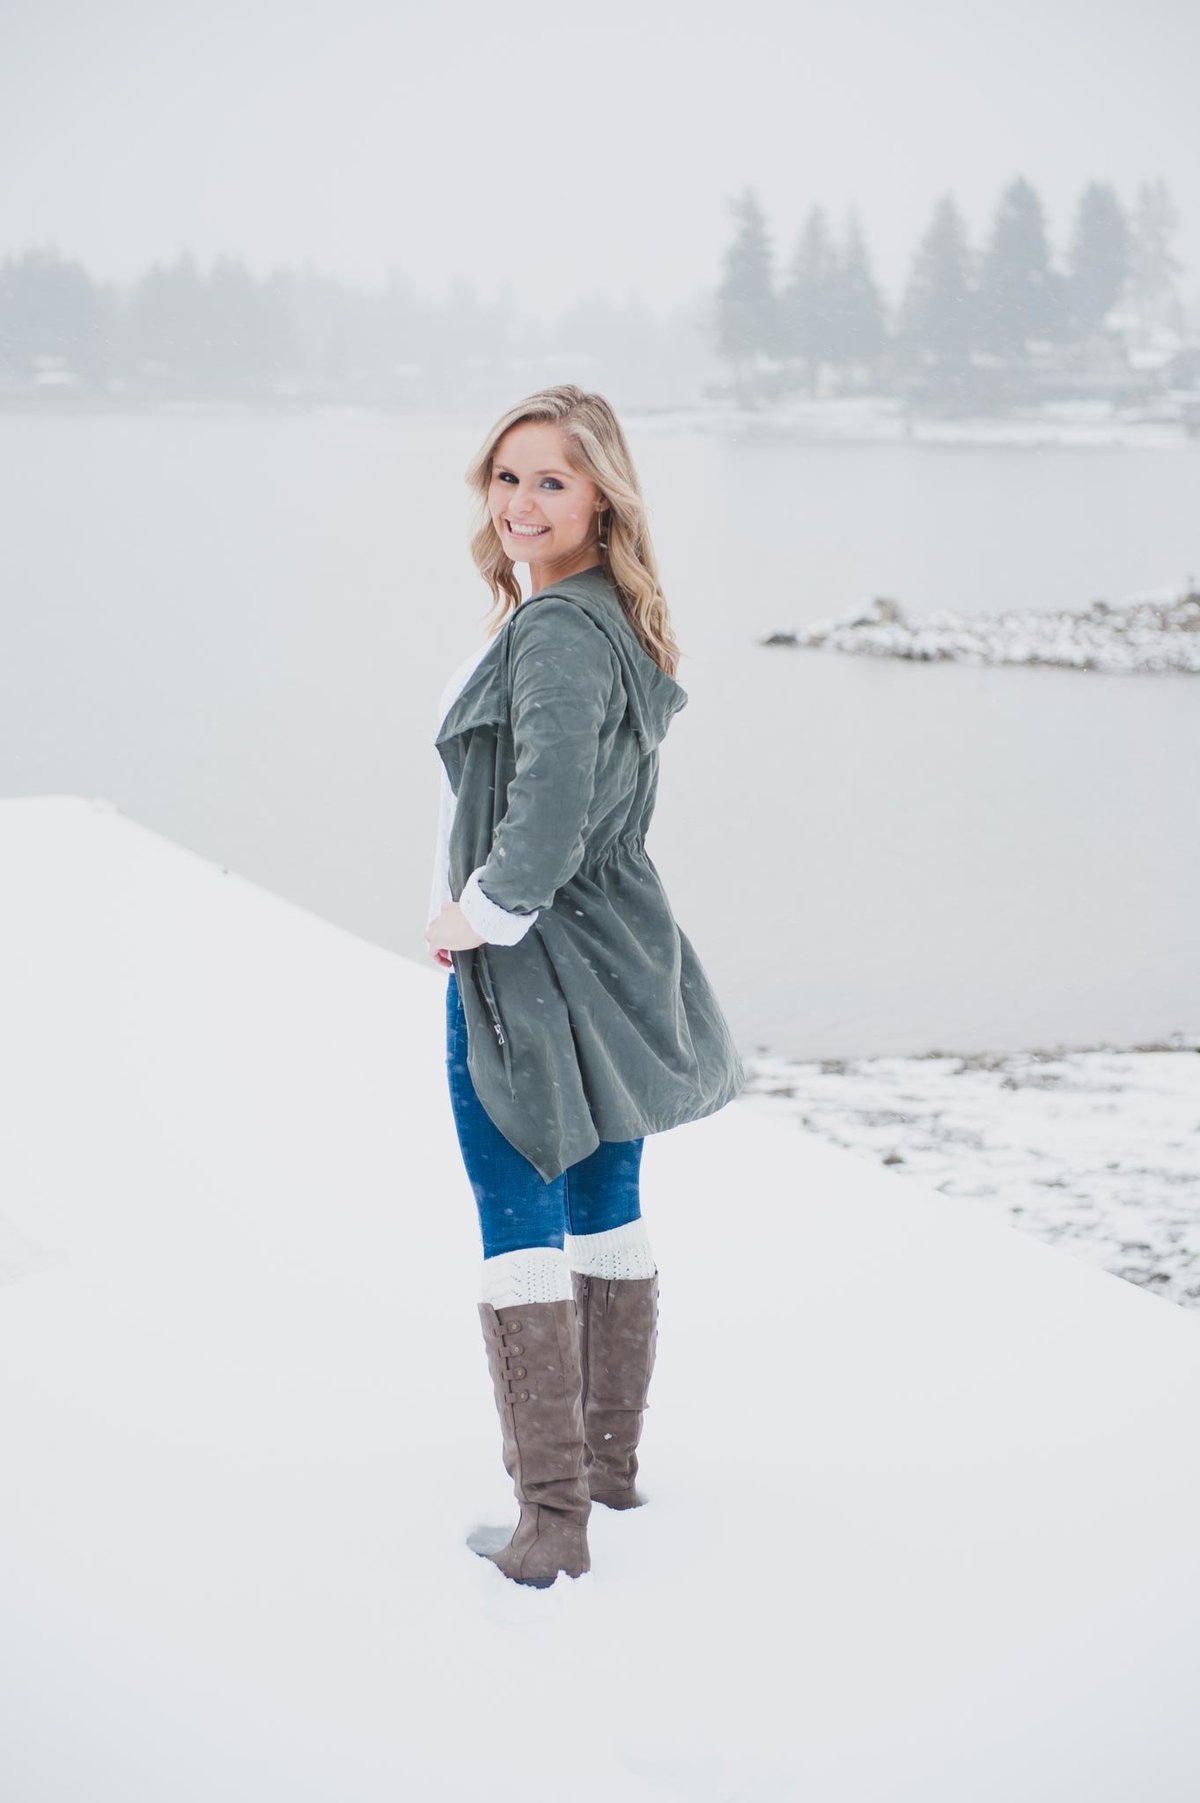 Bonney-Lake-Senior-portraits-snow-AmandaHowse-winter-5